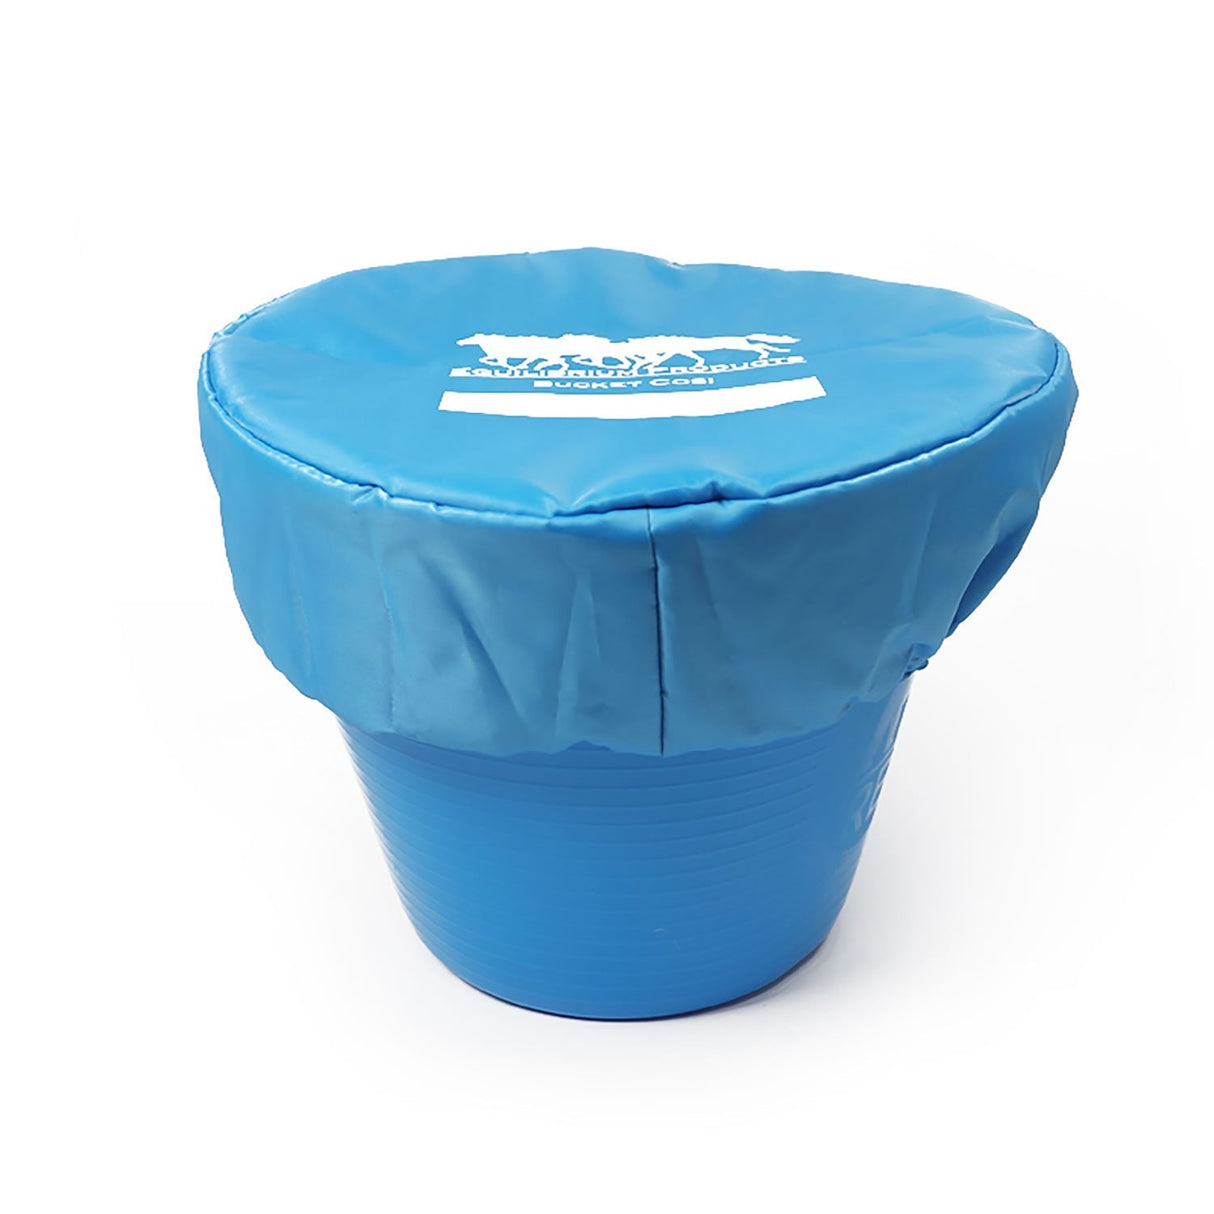 Equilibrium Bucket Cosi Buckets & Bowls Blue Barnstaple Equestrian Supplies